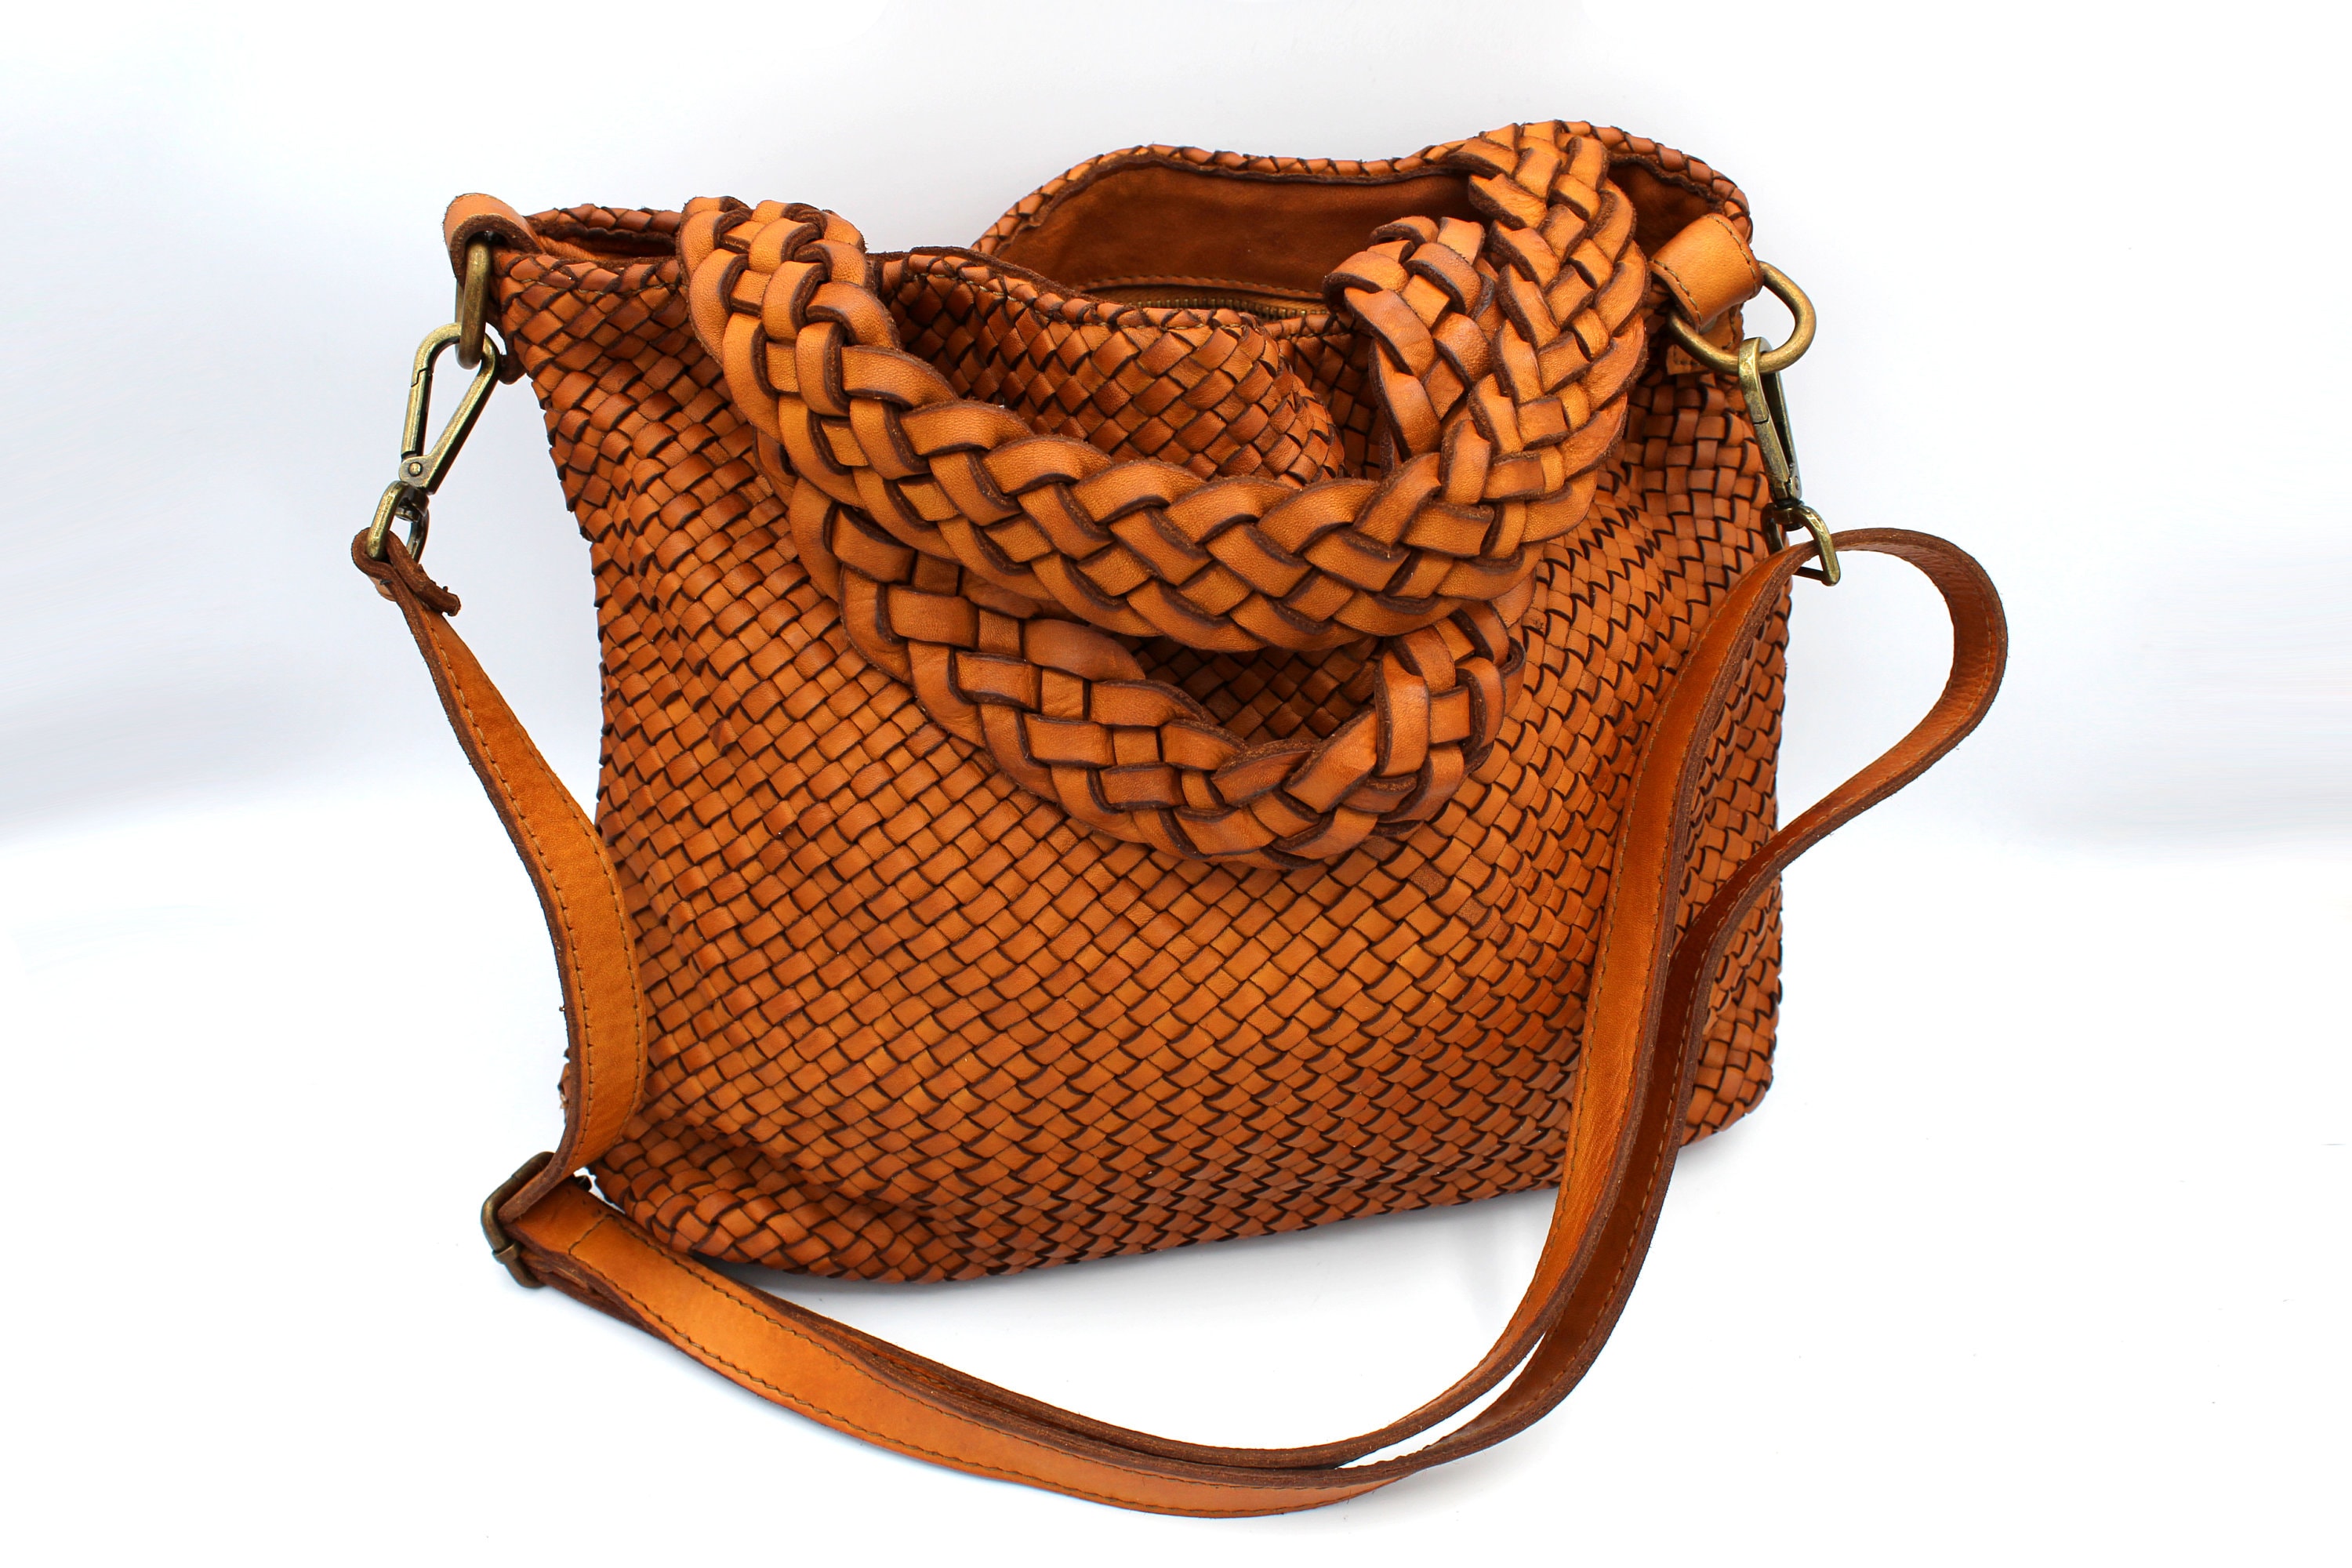 Raintree Online Store Now Offers Kaili Mood Brand Italian Leather Handbags:  Elevating Luxury and Style